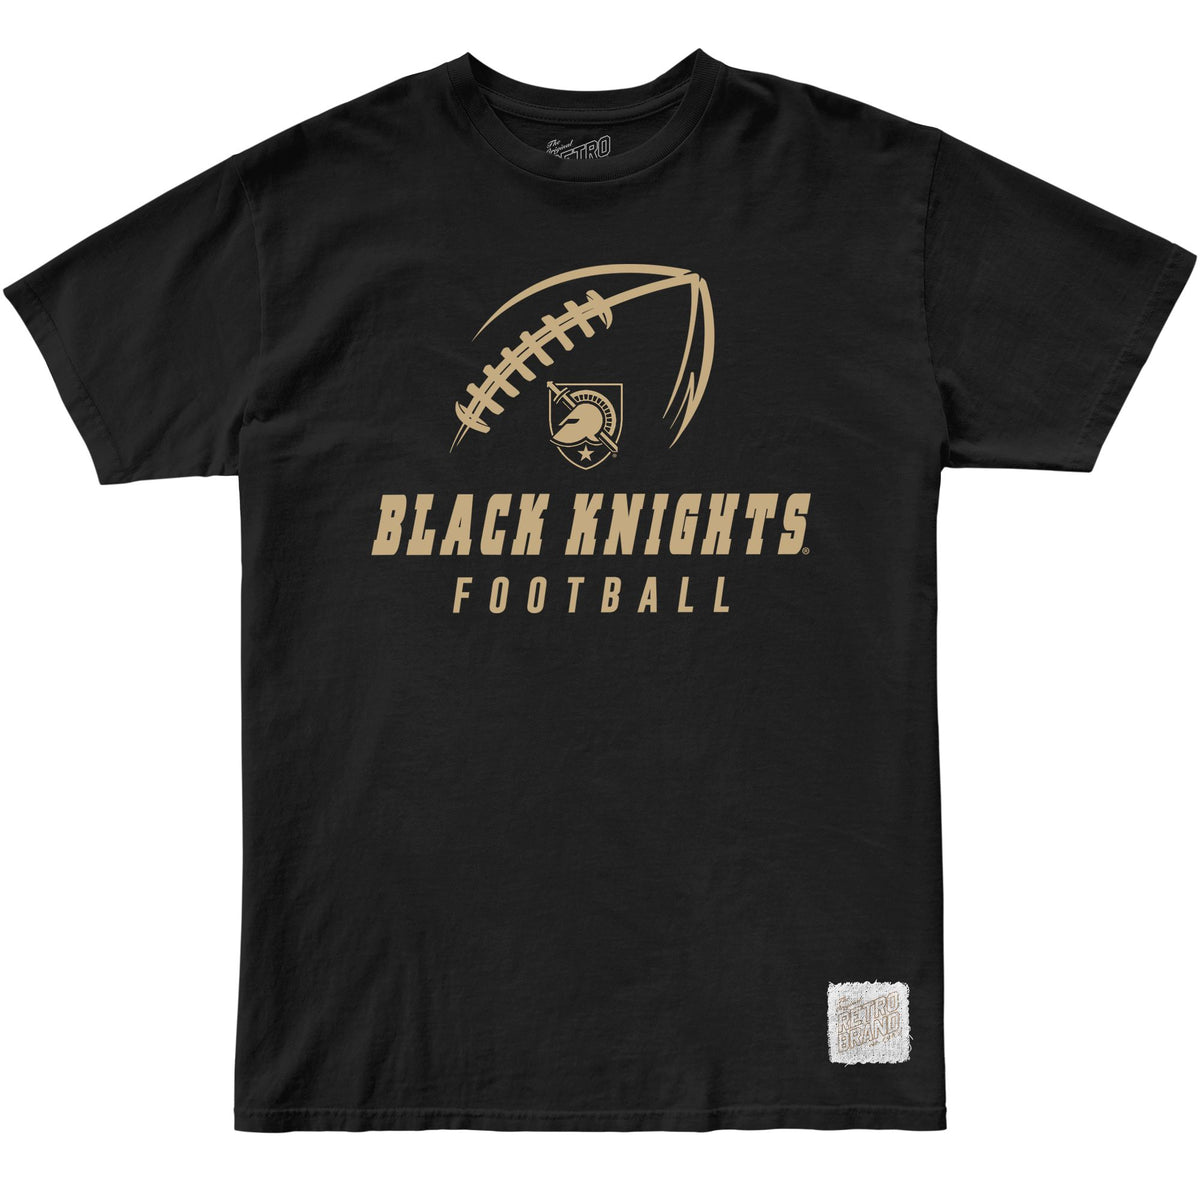 Army Black Knights Football 100% Cotton Tee